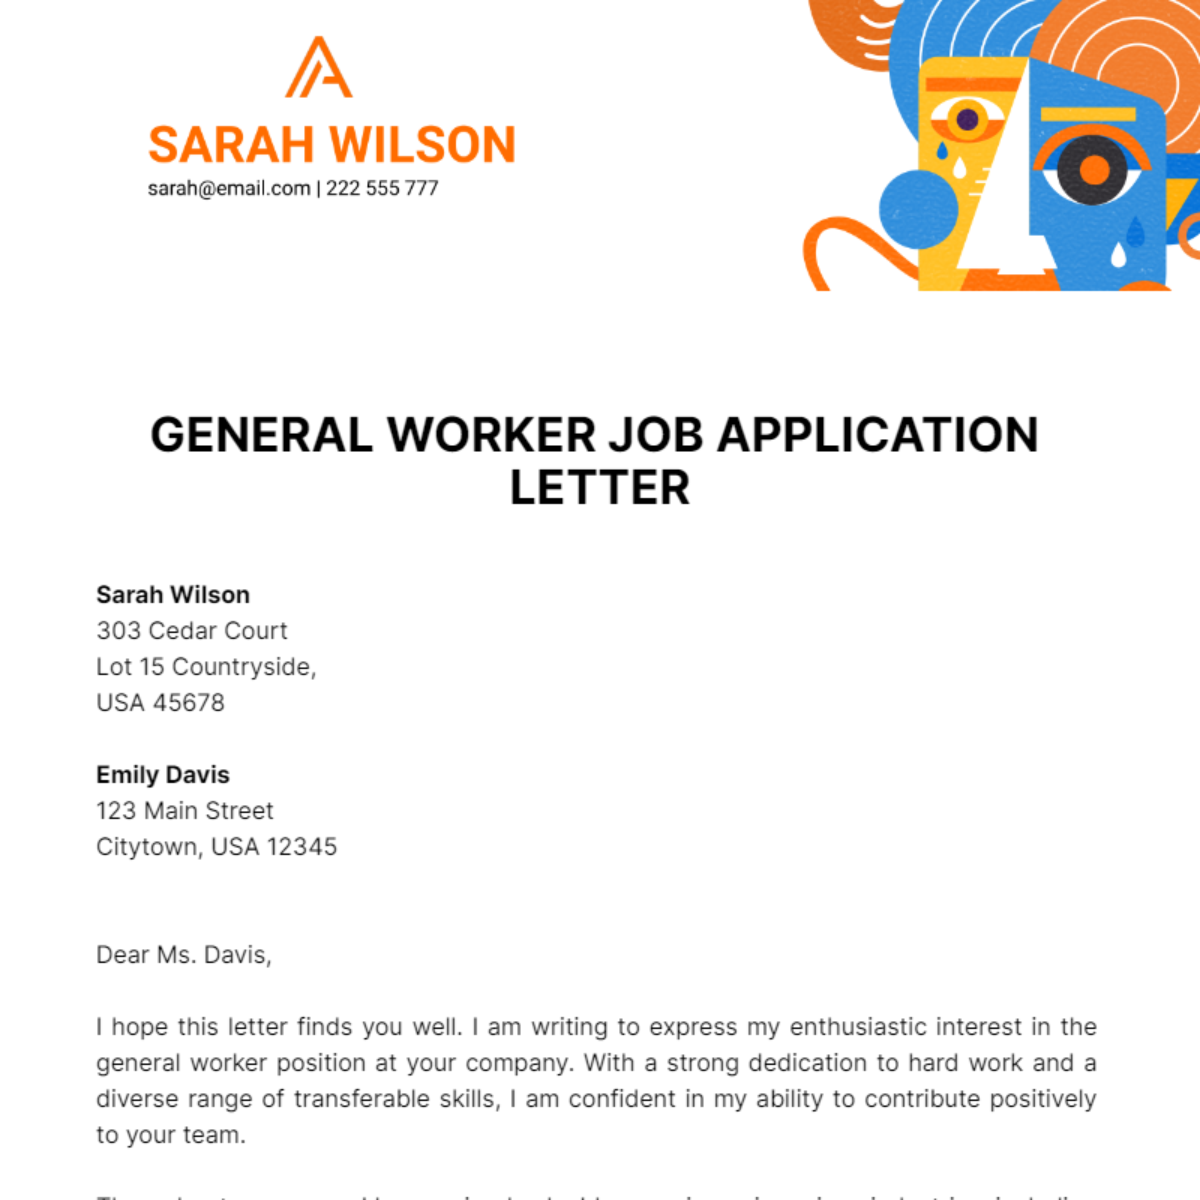 General Worker Job Application Letter  Template